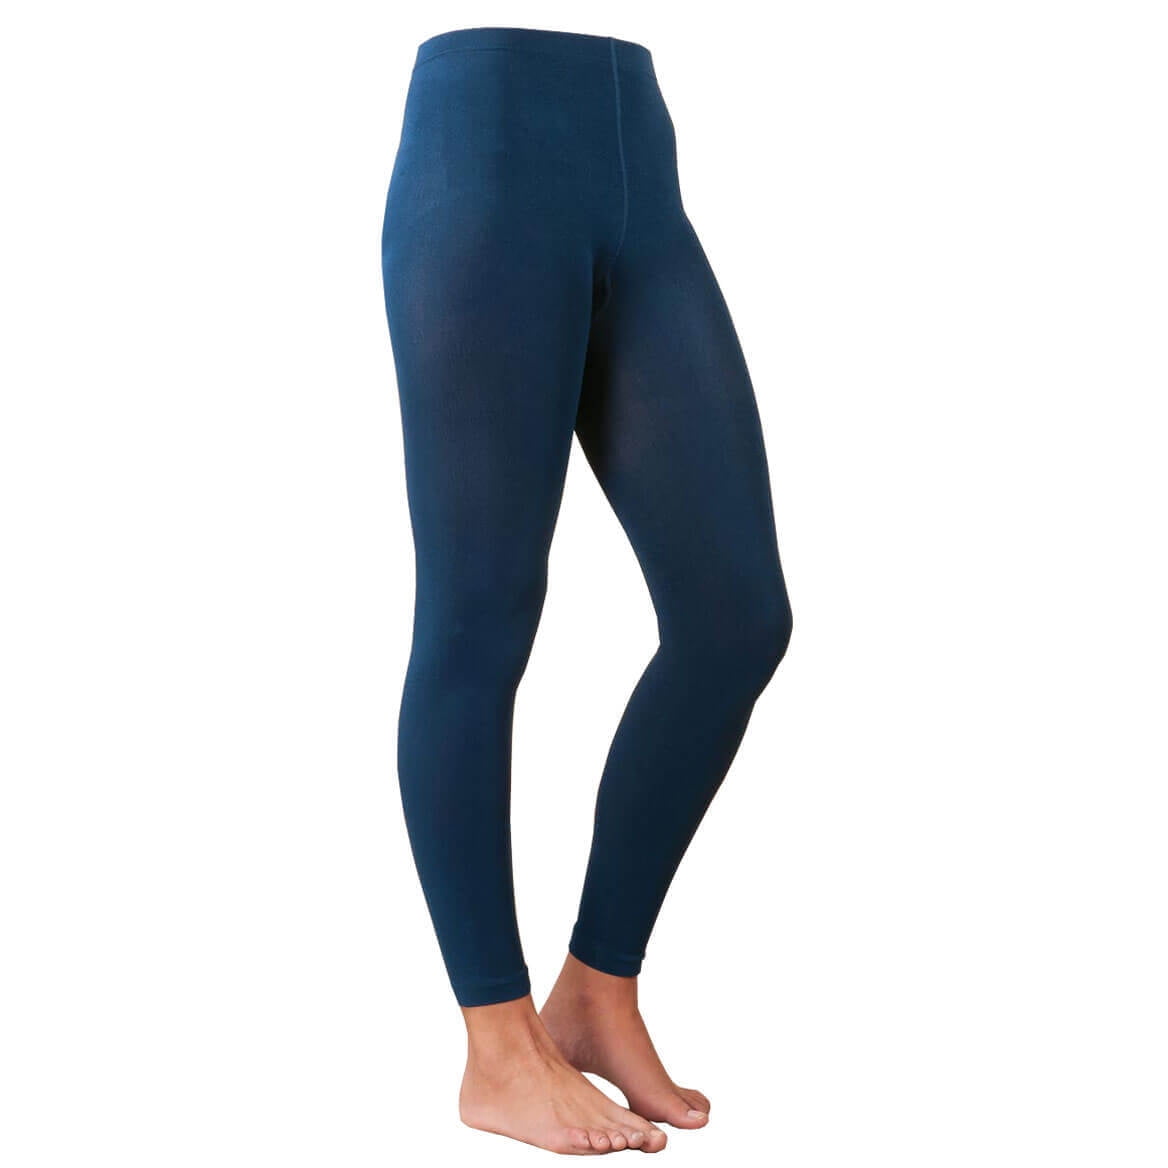 Fleece Lined Leggings by Sawyer Creek, Premium Fabric Blend, Stretchy for  Comfort - Medium/Tall, Black 